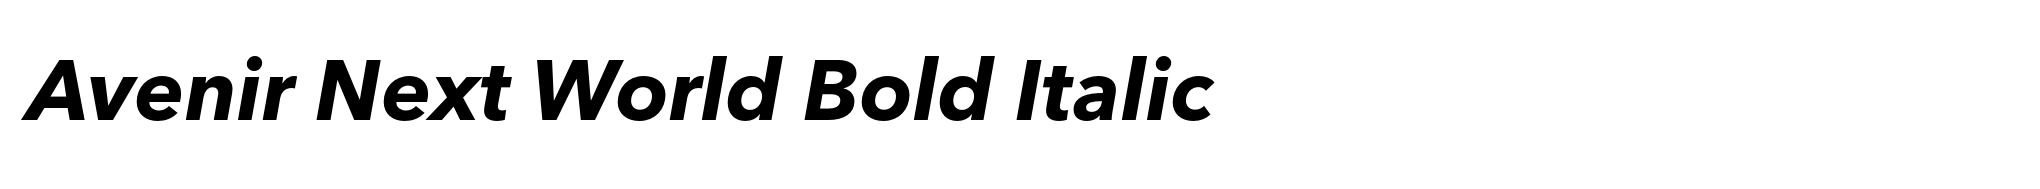 Avenir Next World Bold Italic image